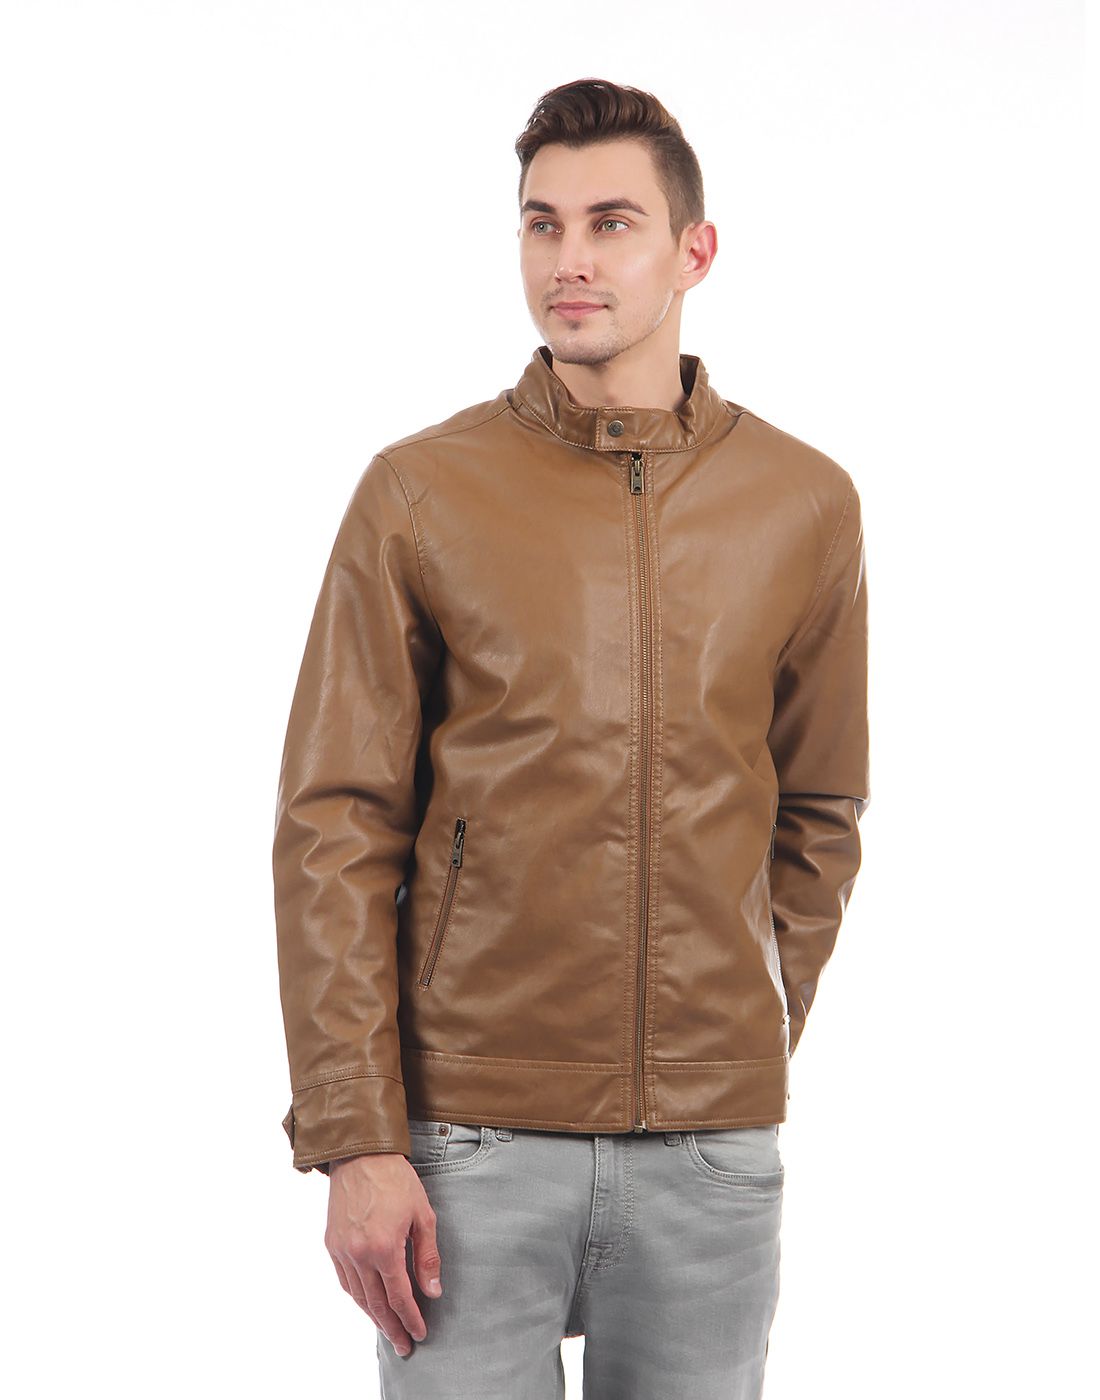 Aeropostale Brown Leather Jacket - Buy Aeropostale Brown Leather Jacket ...